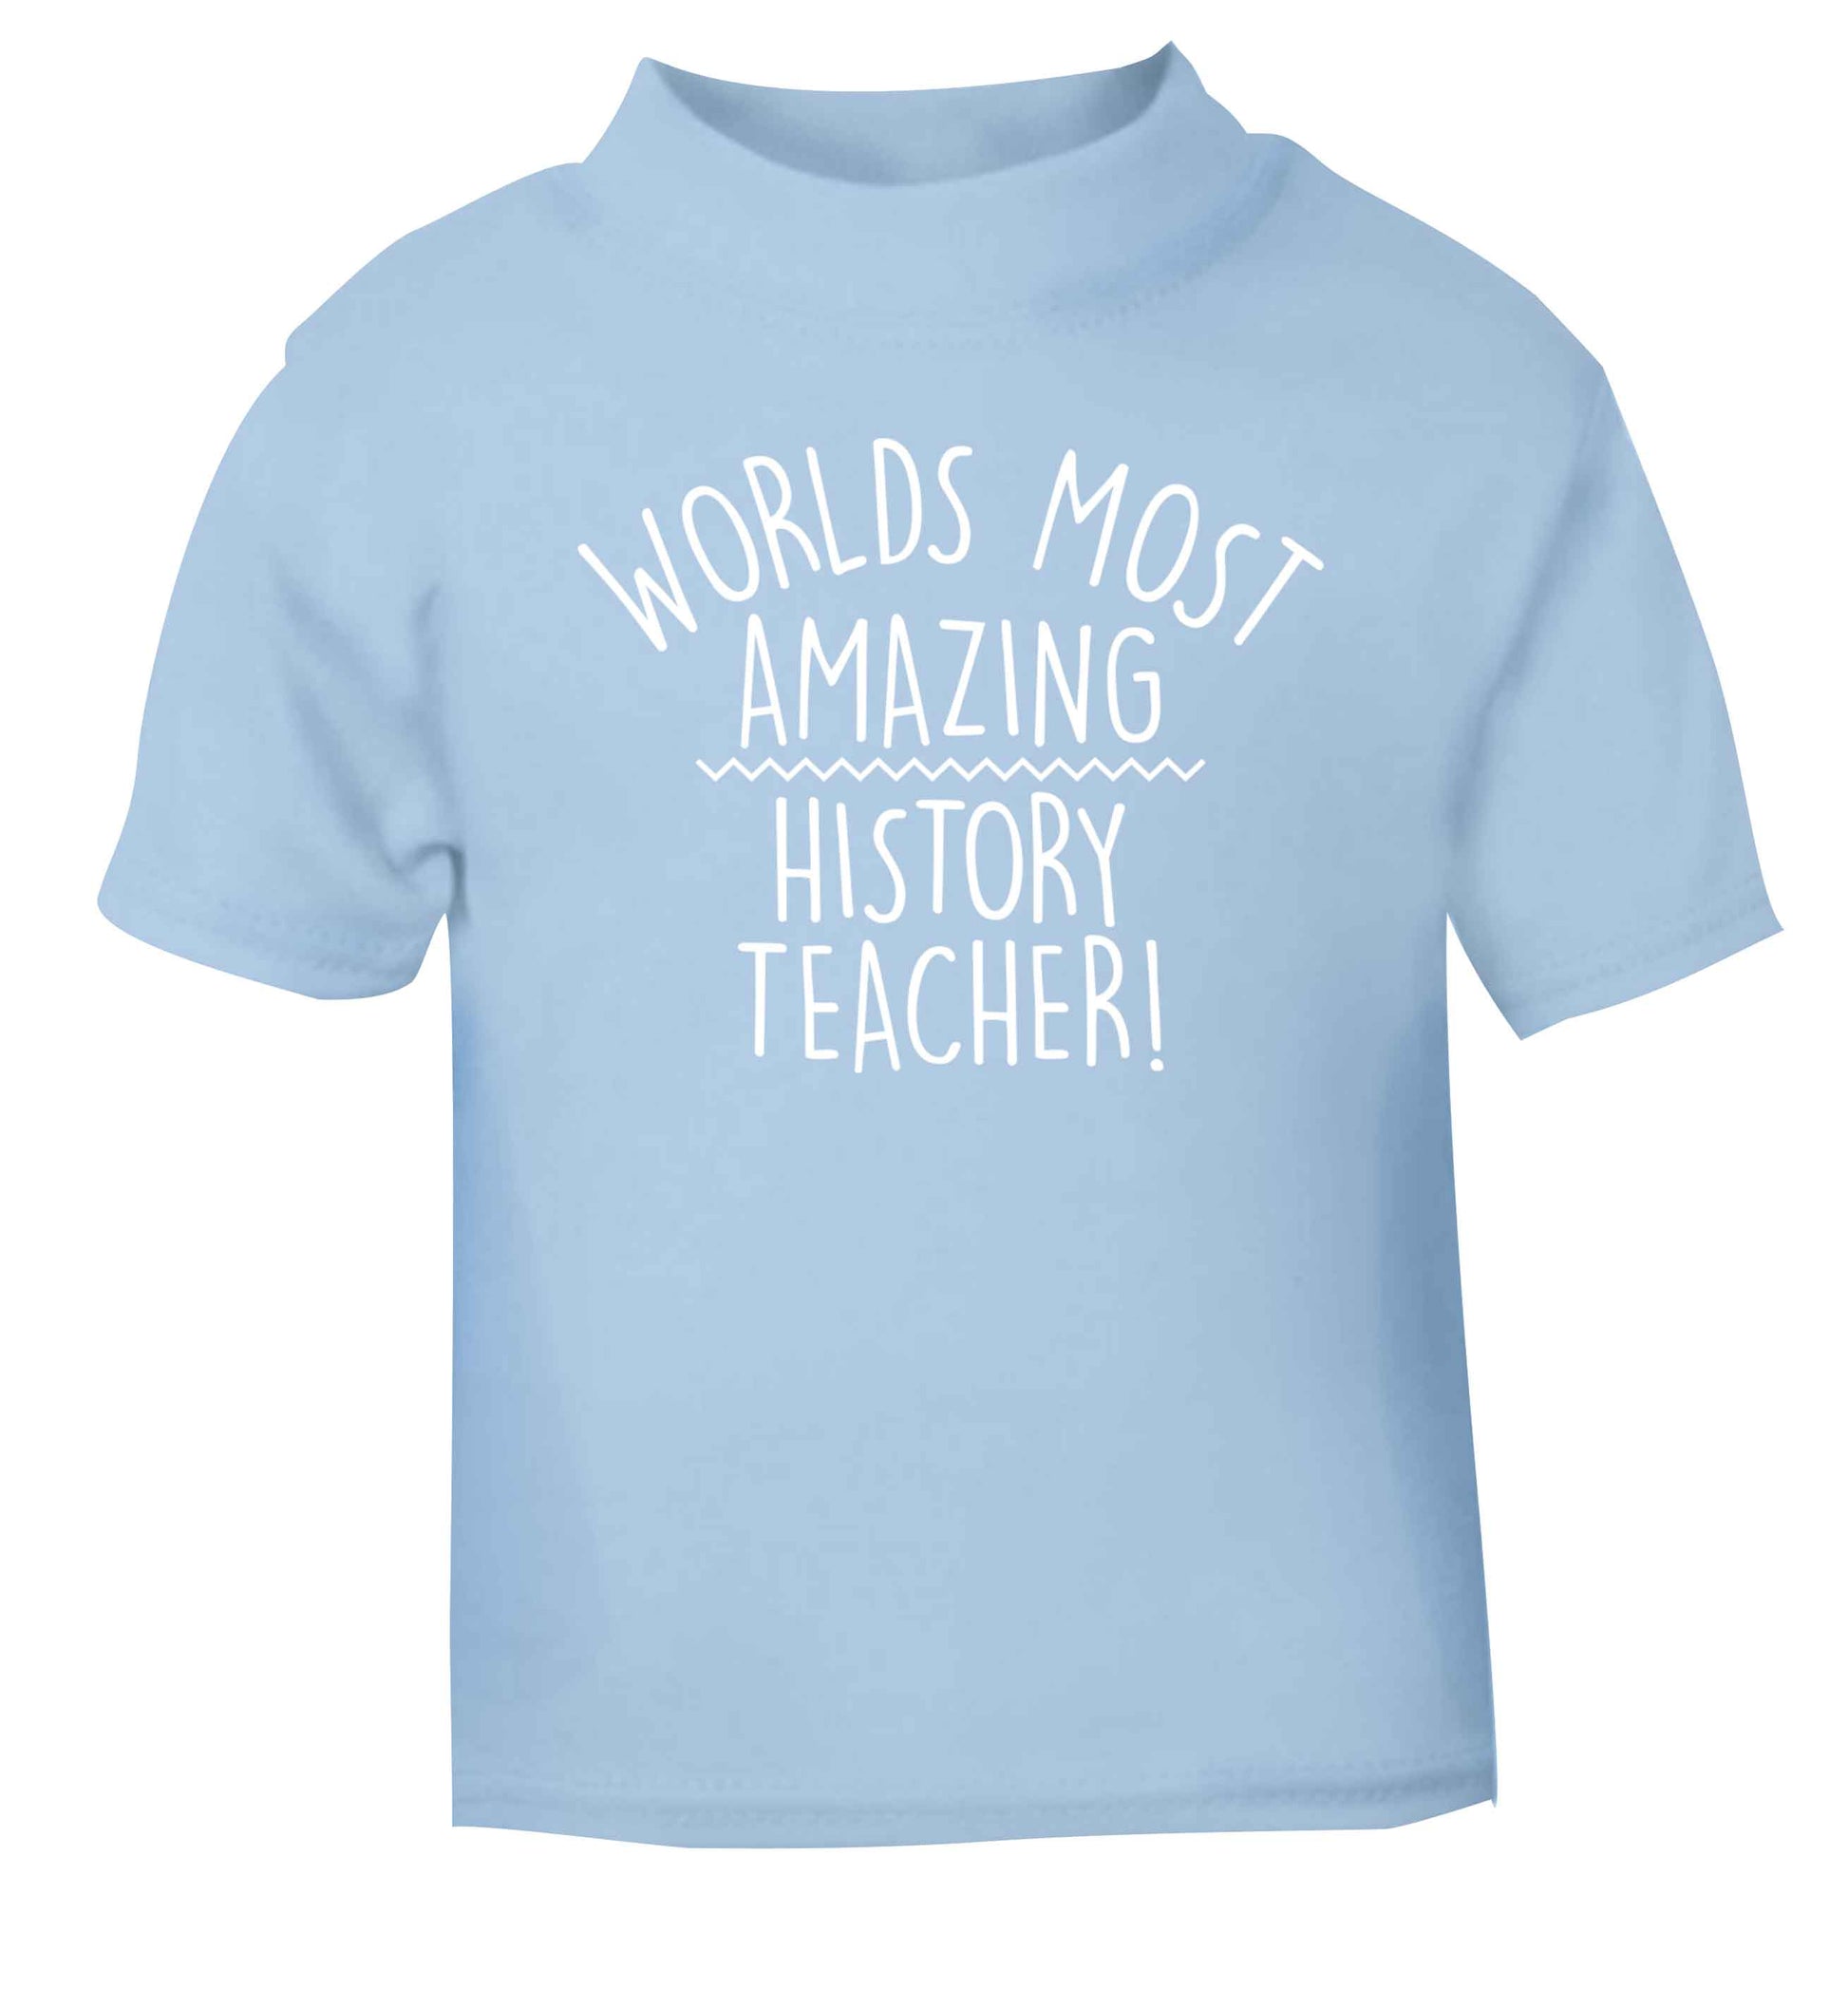 Worlds most amazing History teacher light blue baby toddler Tshirt 2 Years